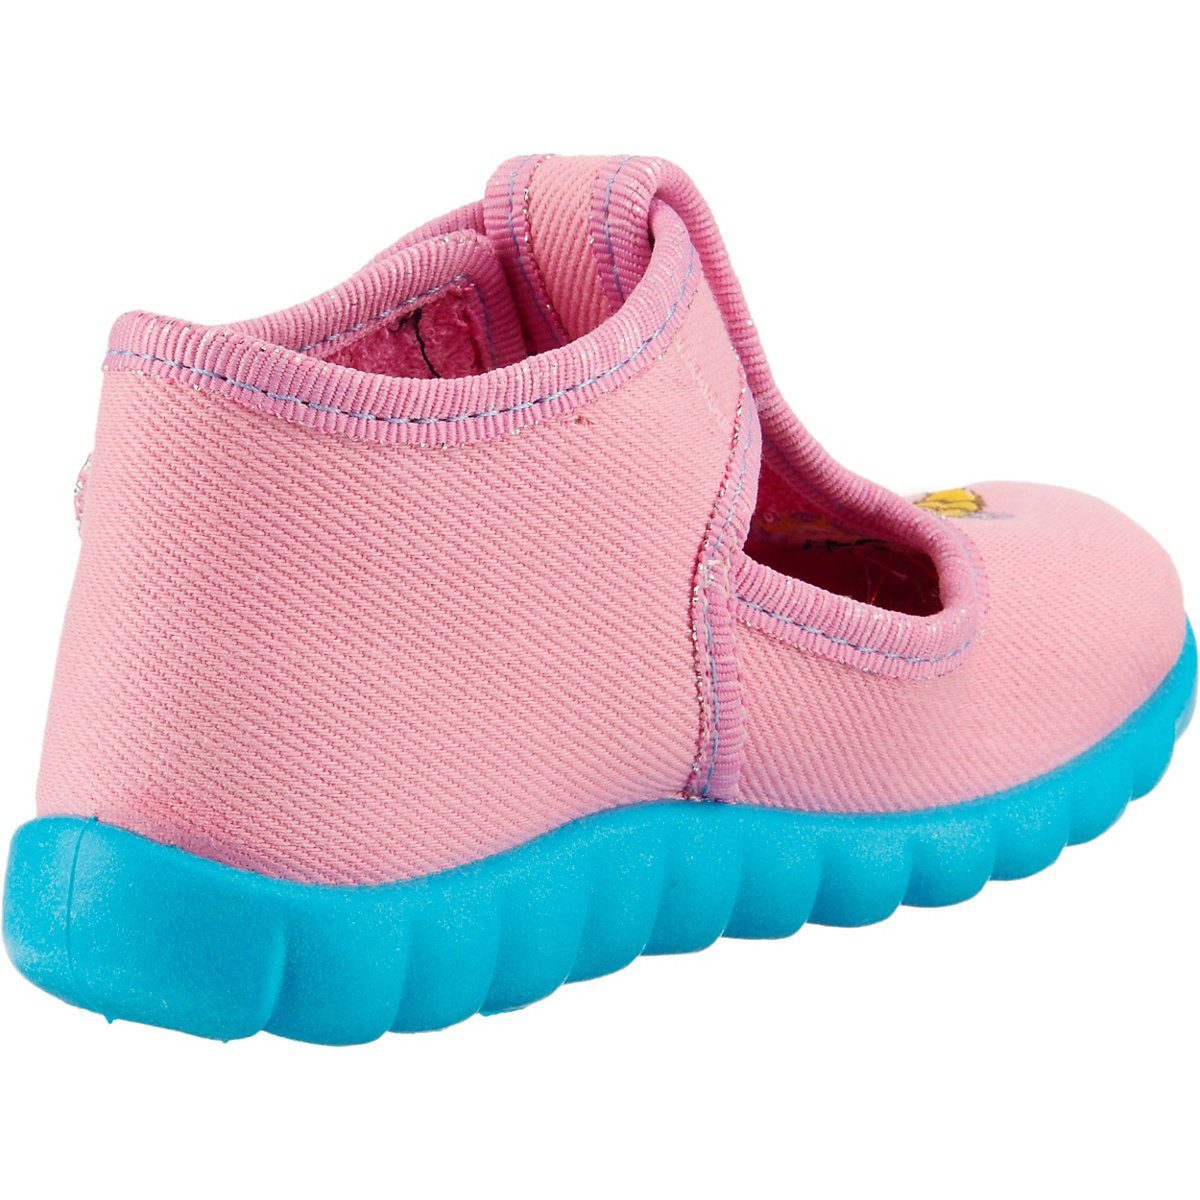 Schuhe Babyschuhe Mädchen Fischer-Markenschuh Baby Hausschuhe für Mädchen Hausschuh